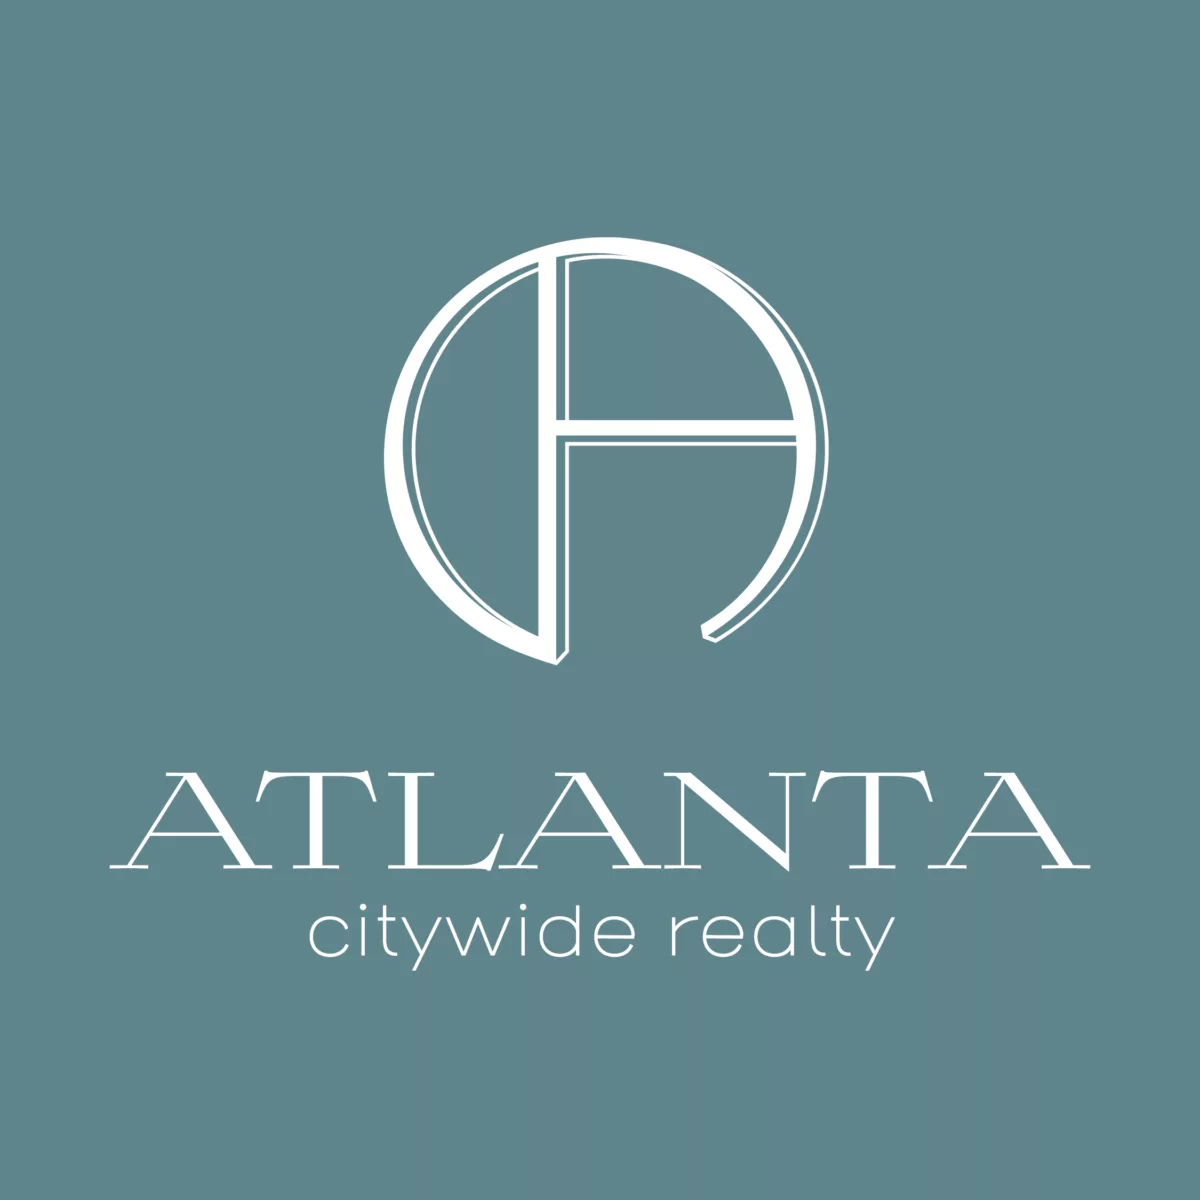 Atlanta Citywide Realty Brand Identity